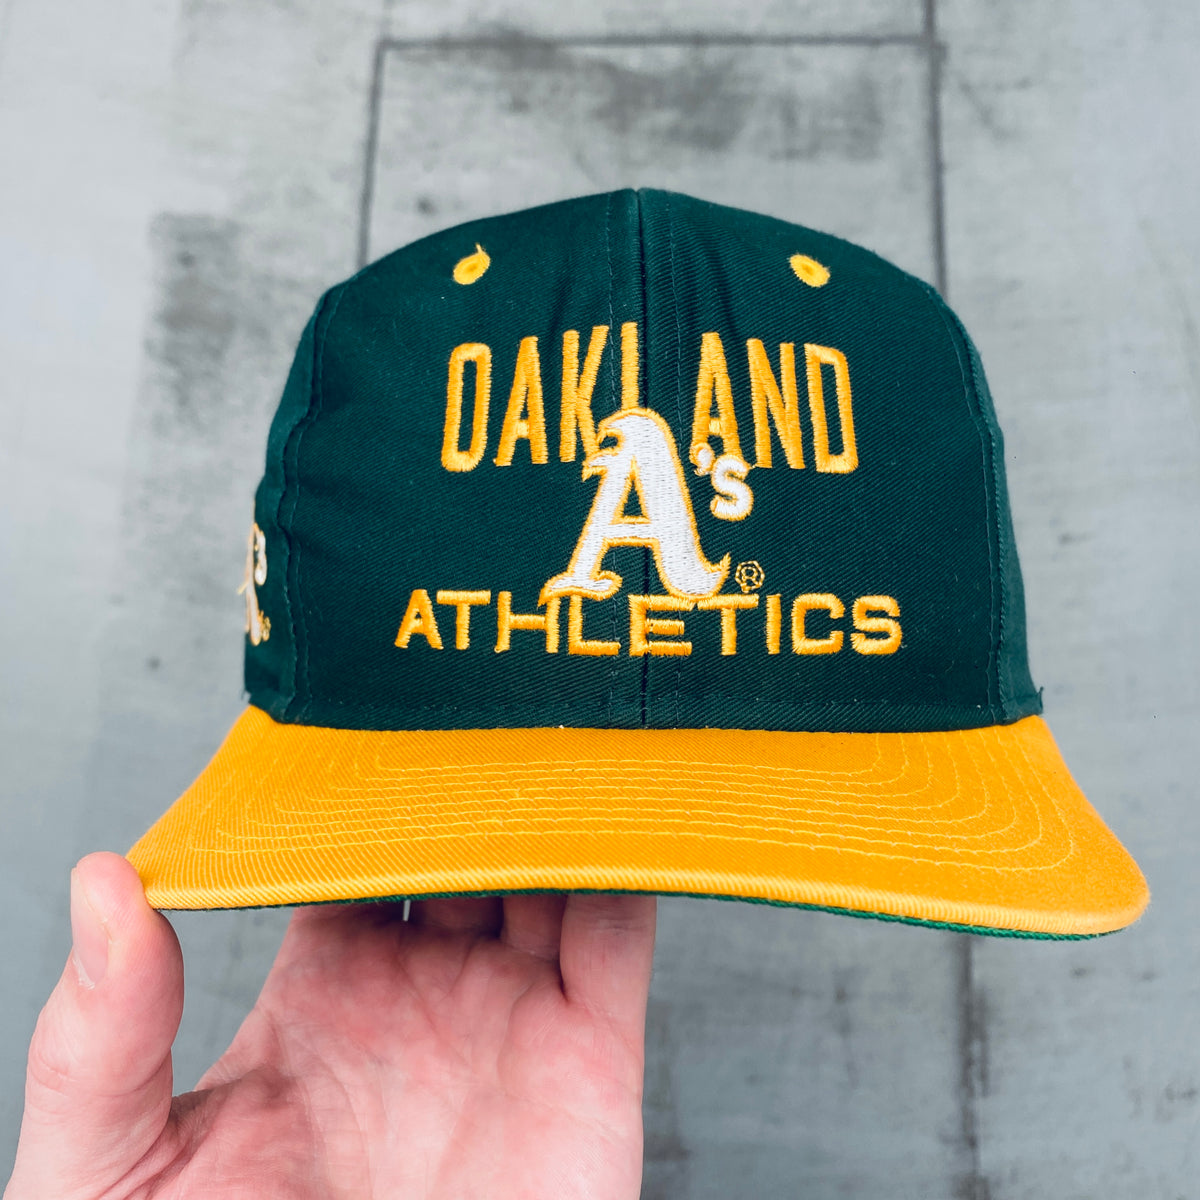 Unisex Vintage Oakland Athletics Jersey - The Vintage Twin